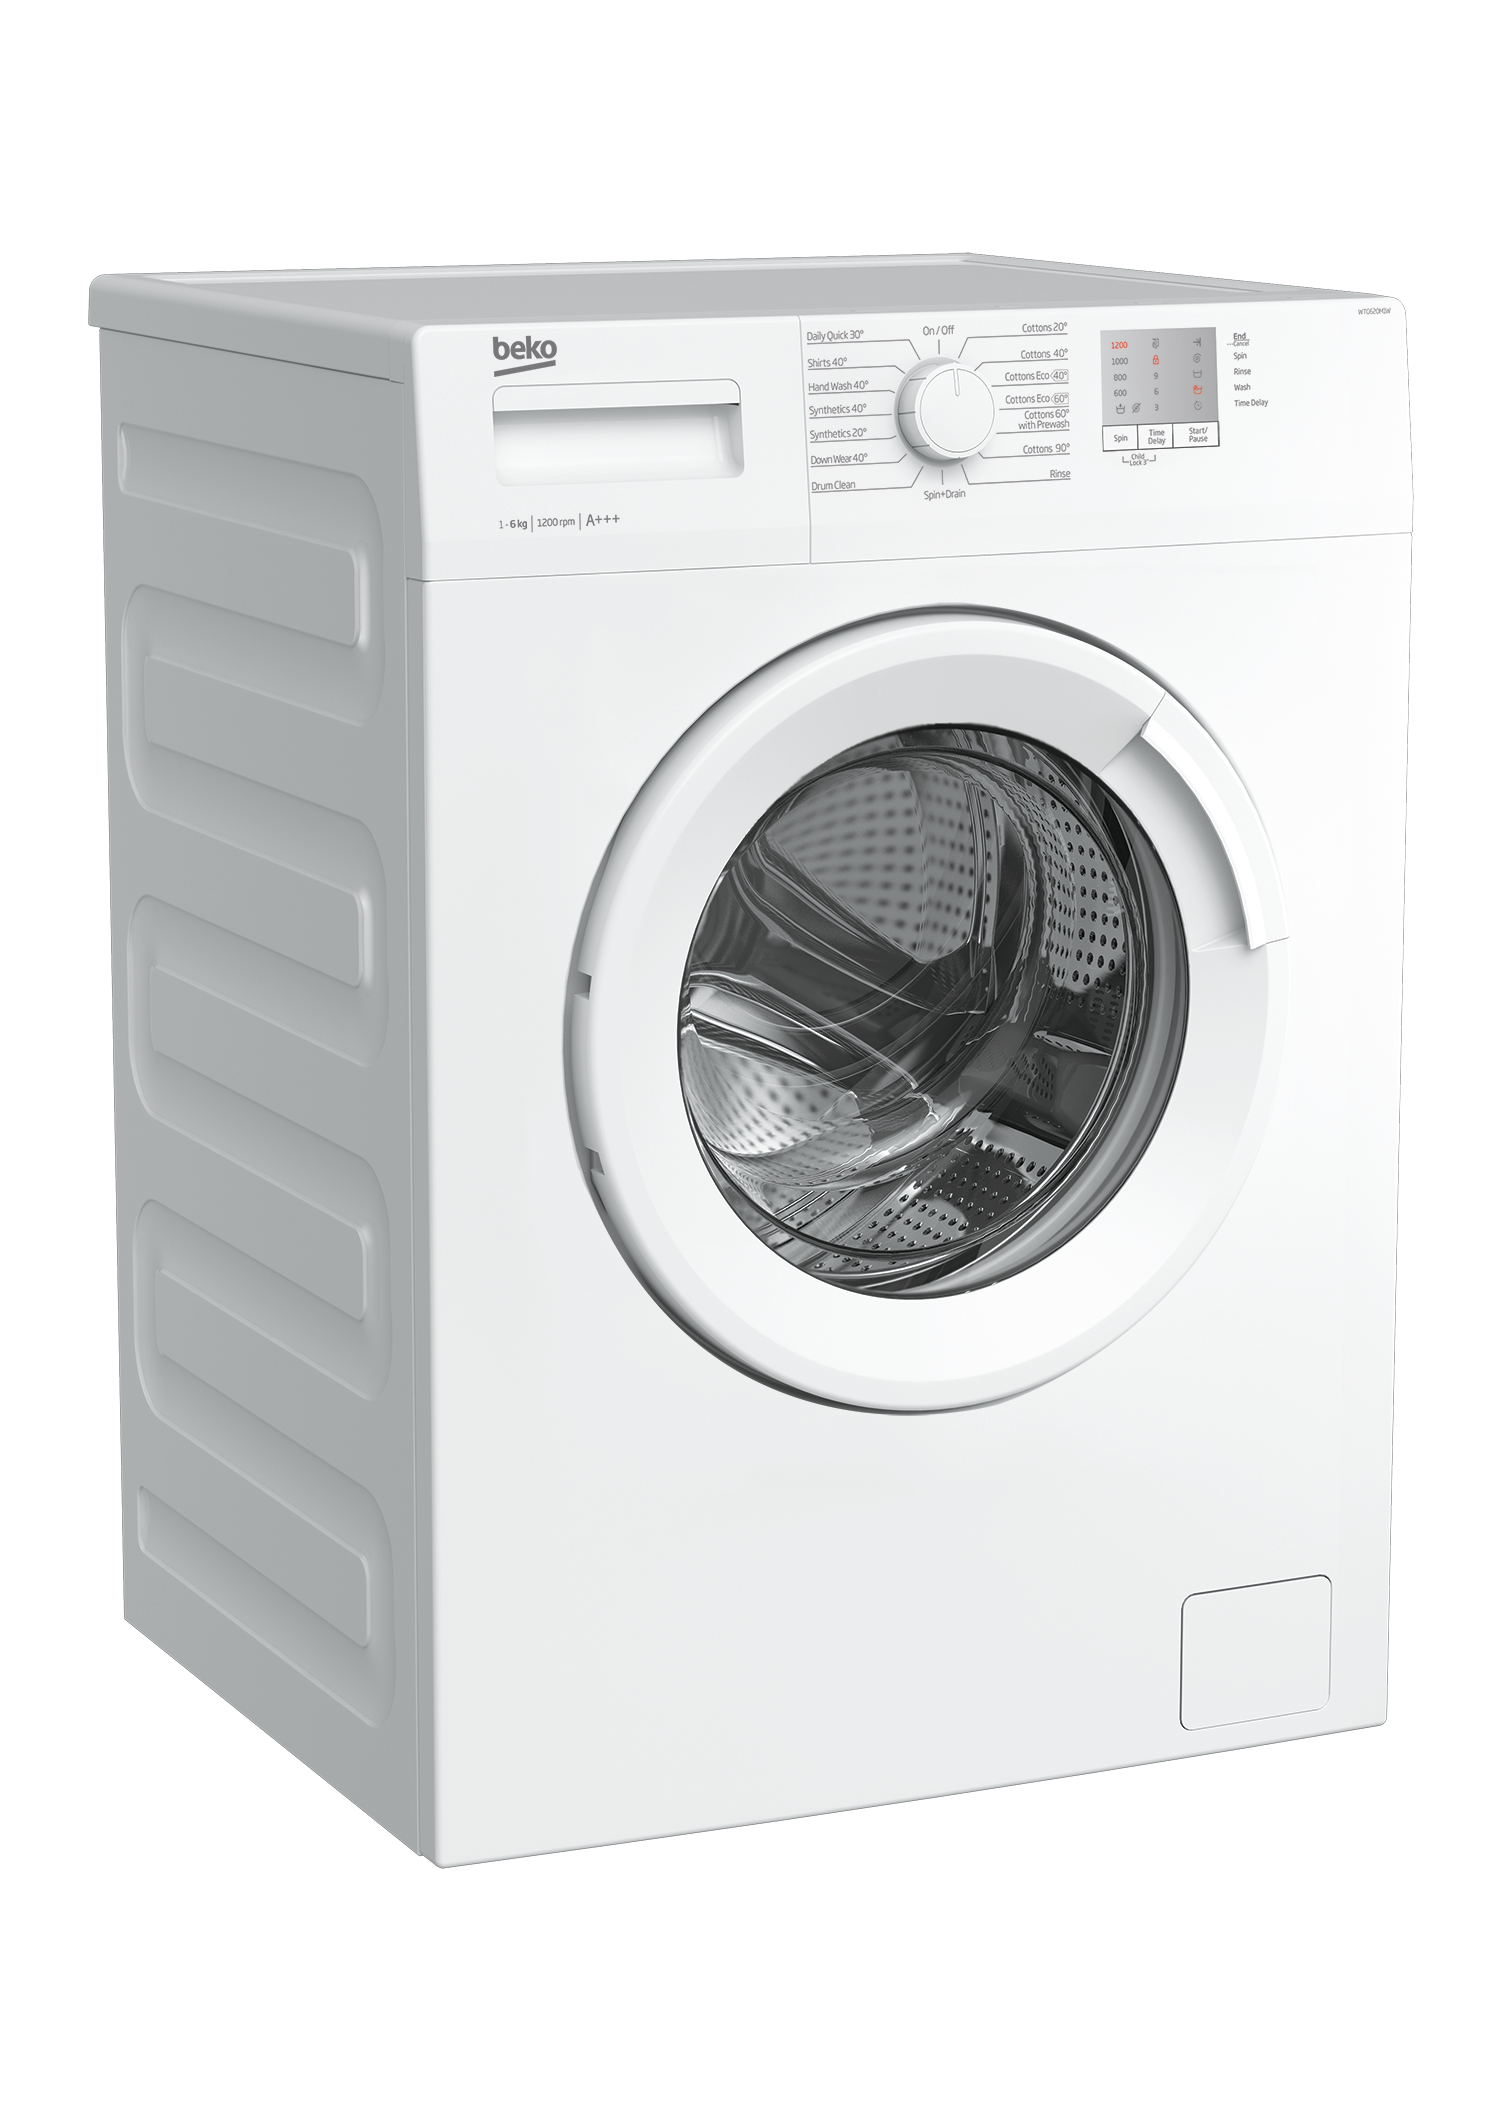 Rated Washing Machine in White Beko WTG50M1W Freestanding A+ 